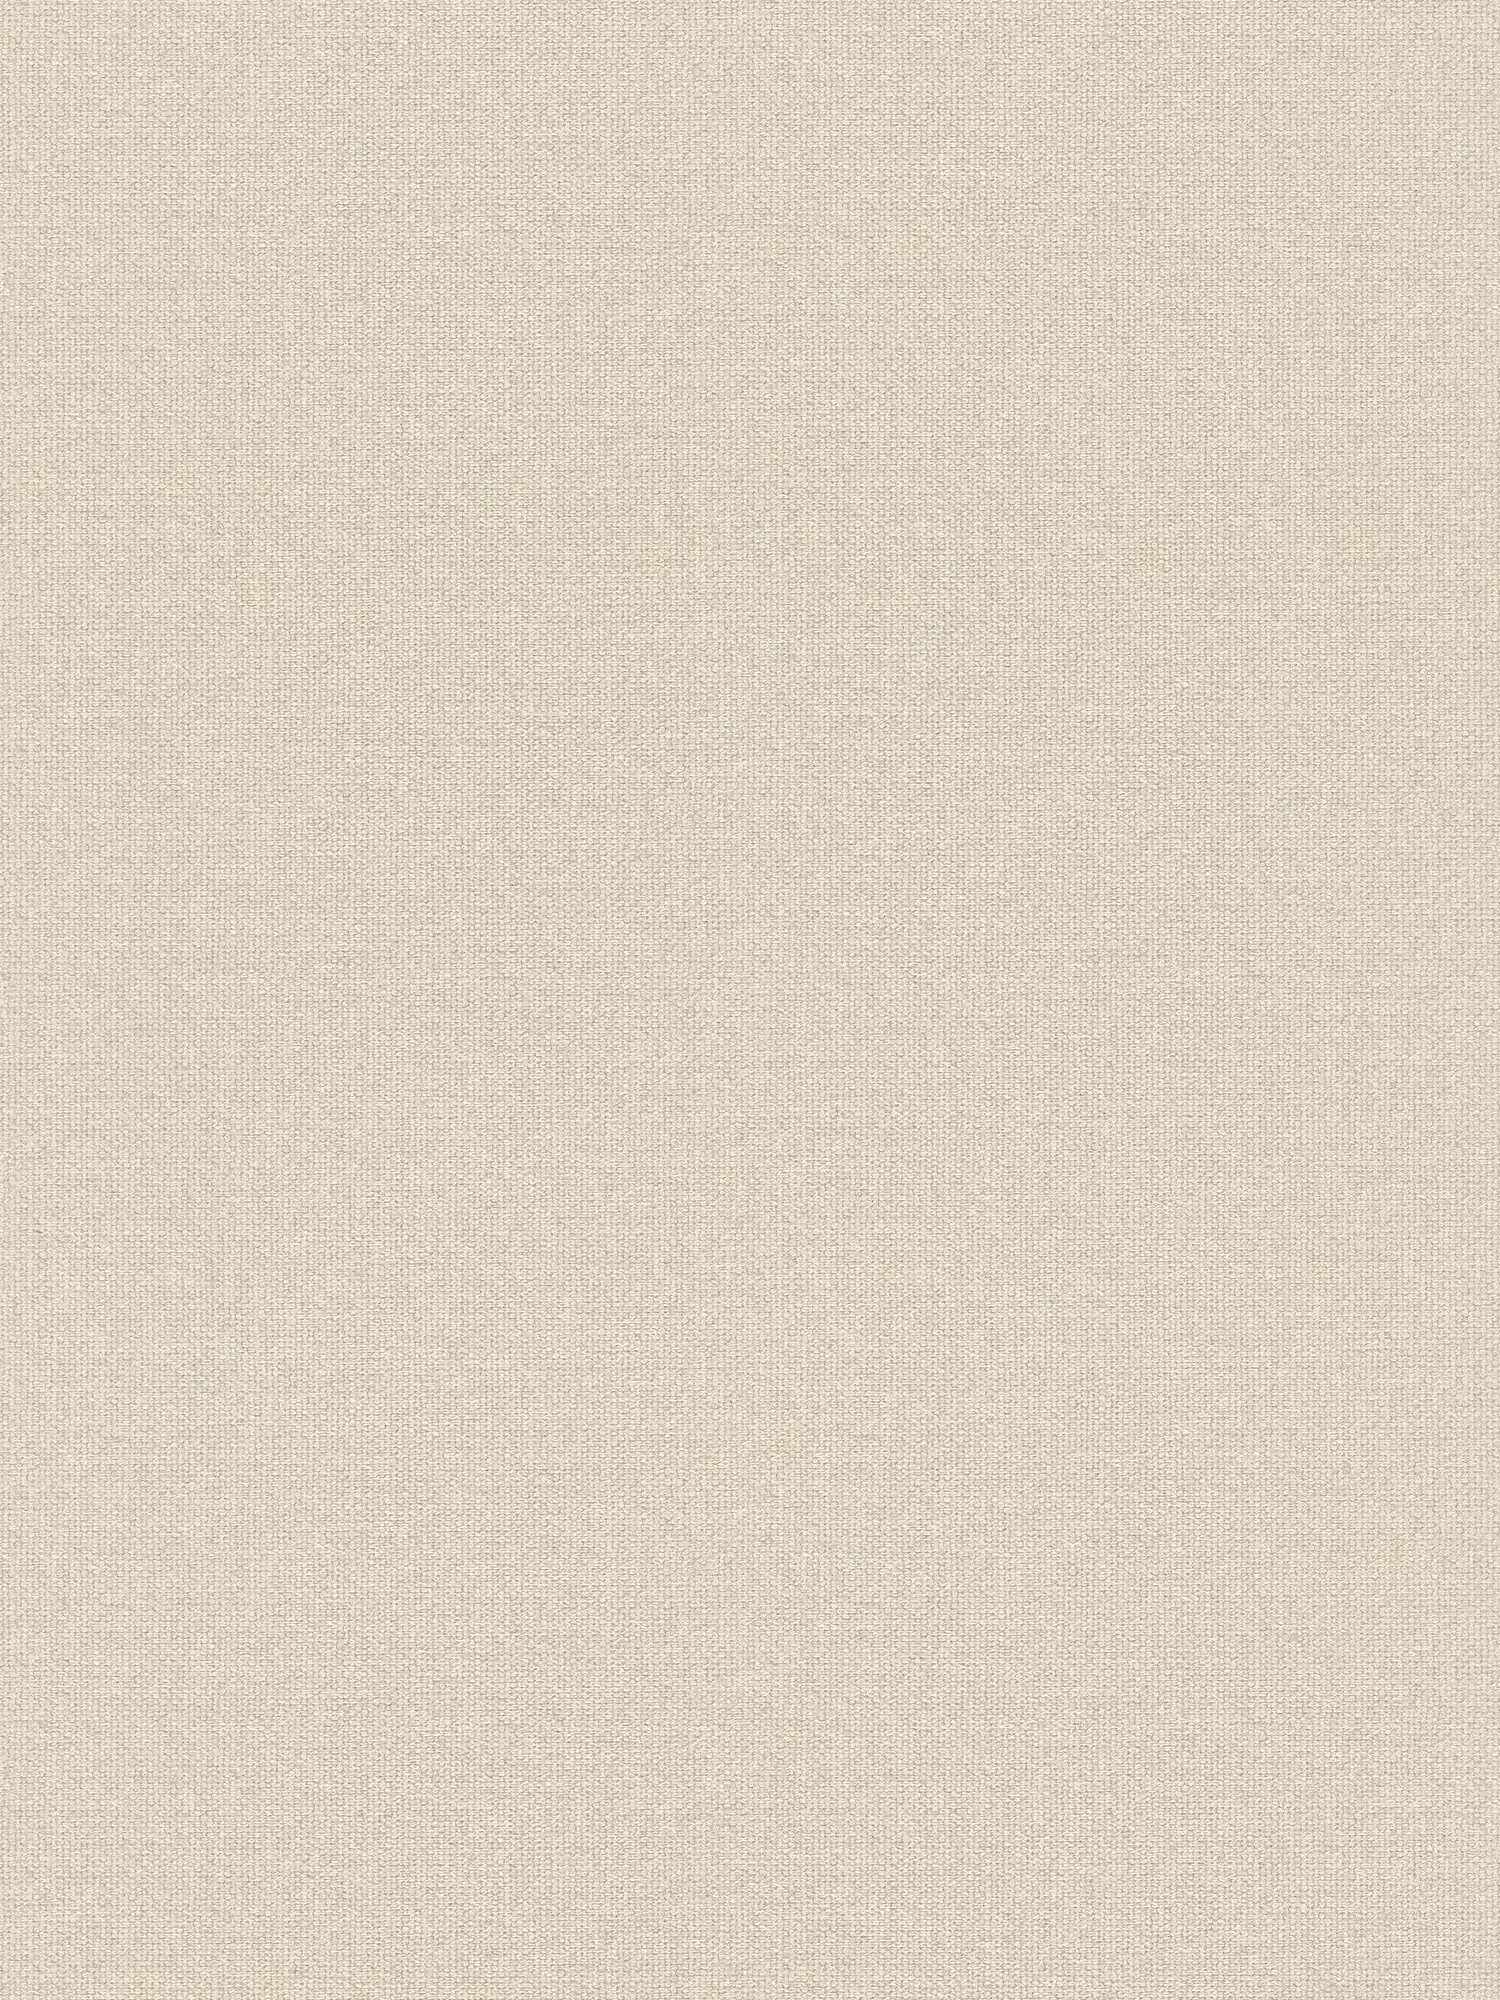 Non-woven wallpaper linen look with texture details, plain - cream, beige
